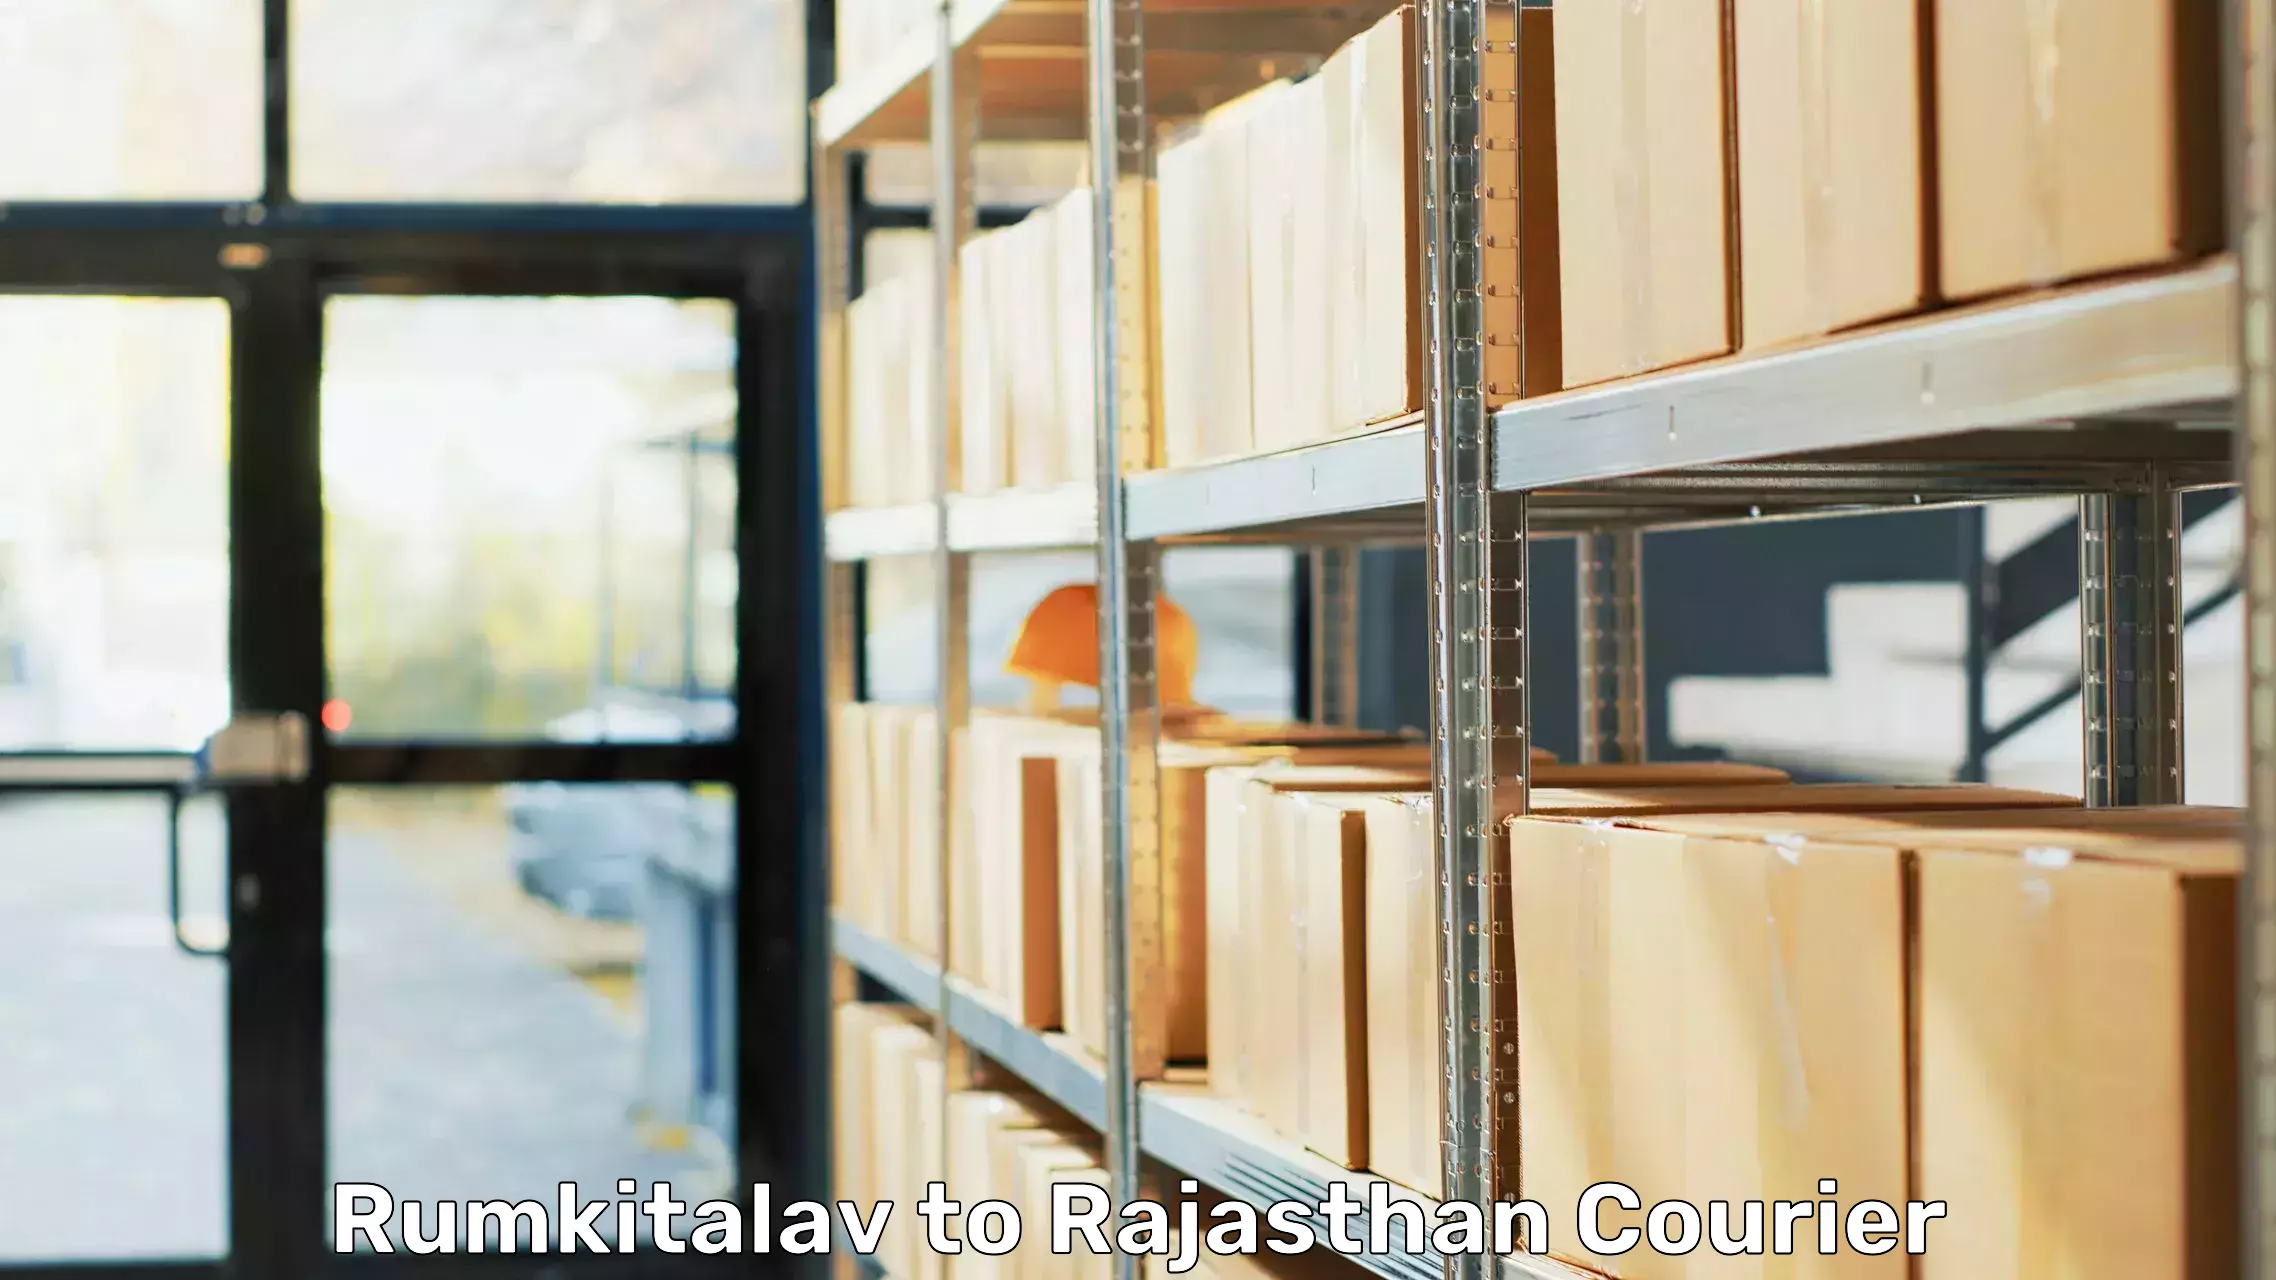 Furniture relocation experts Rumkitalav to Nawalgarh